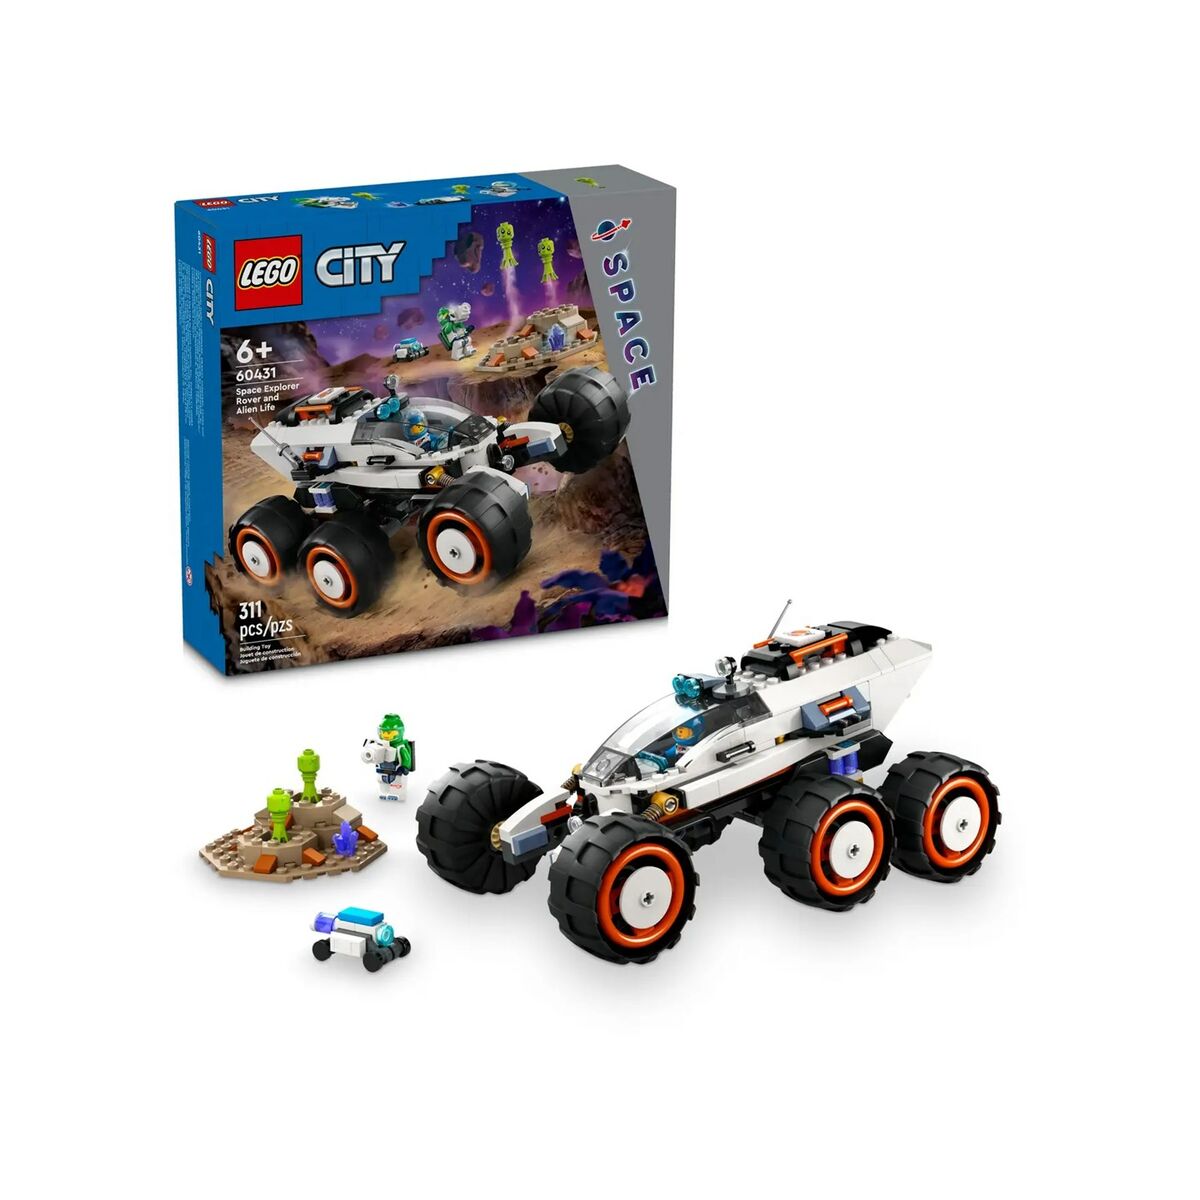 Playset Lego 60431 City Space